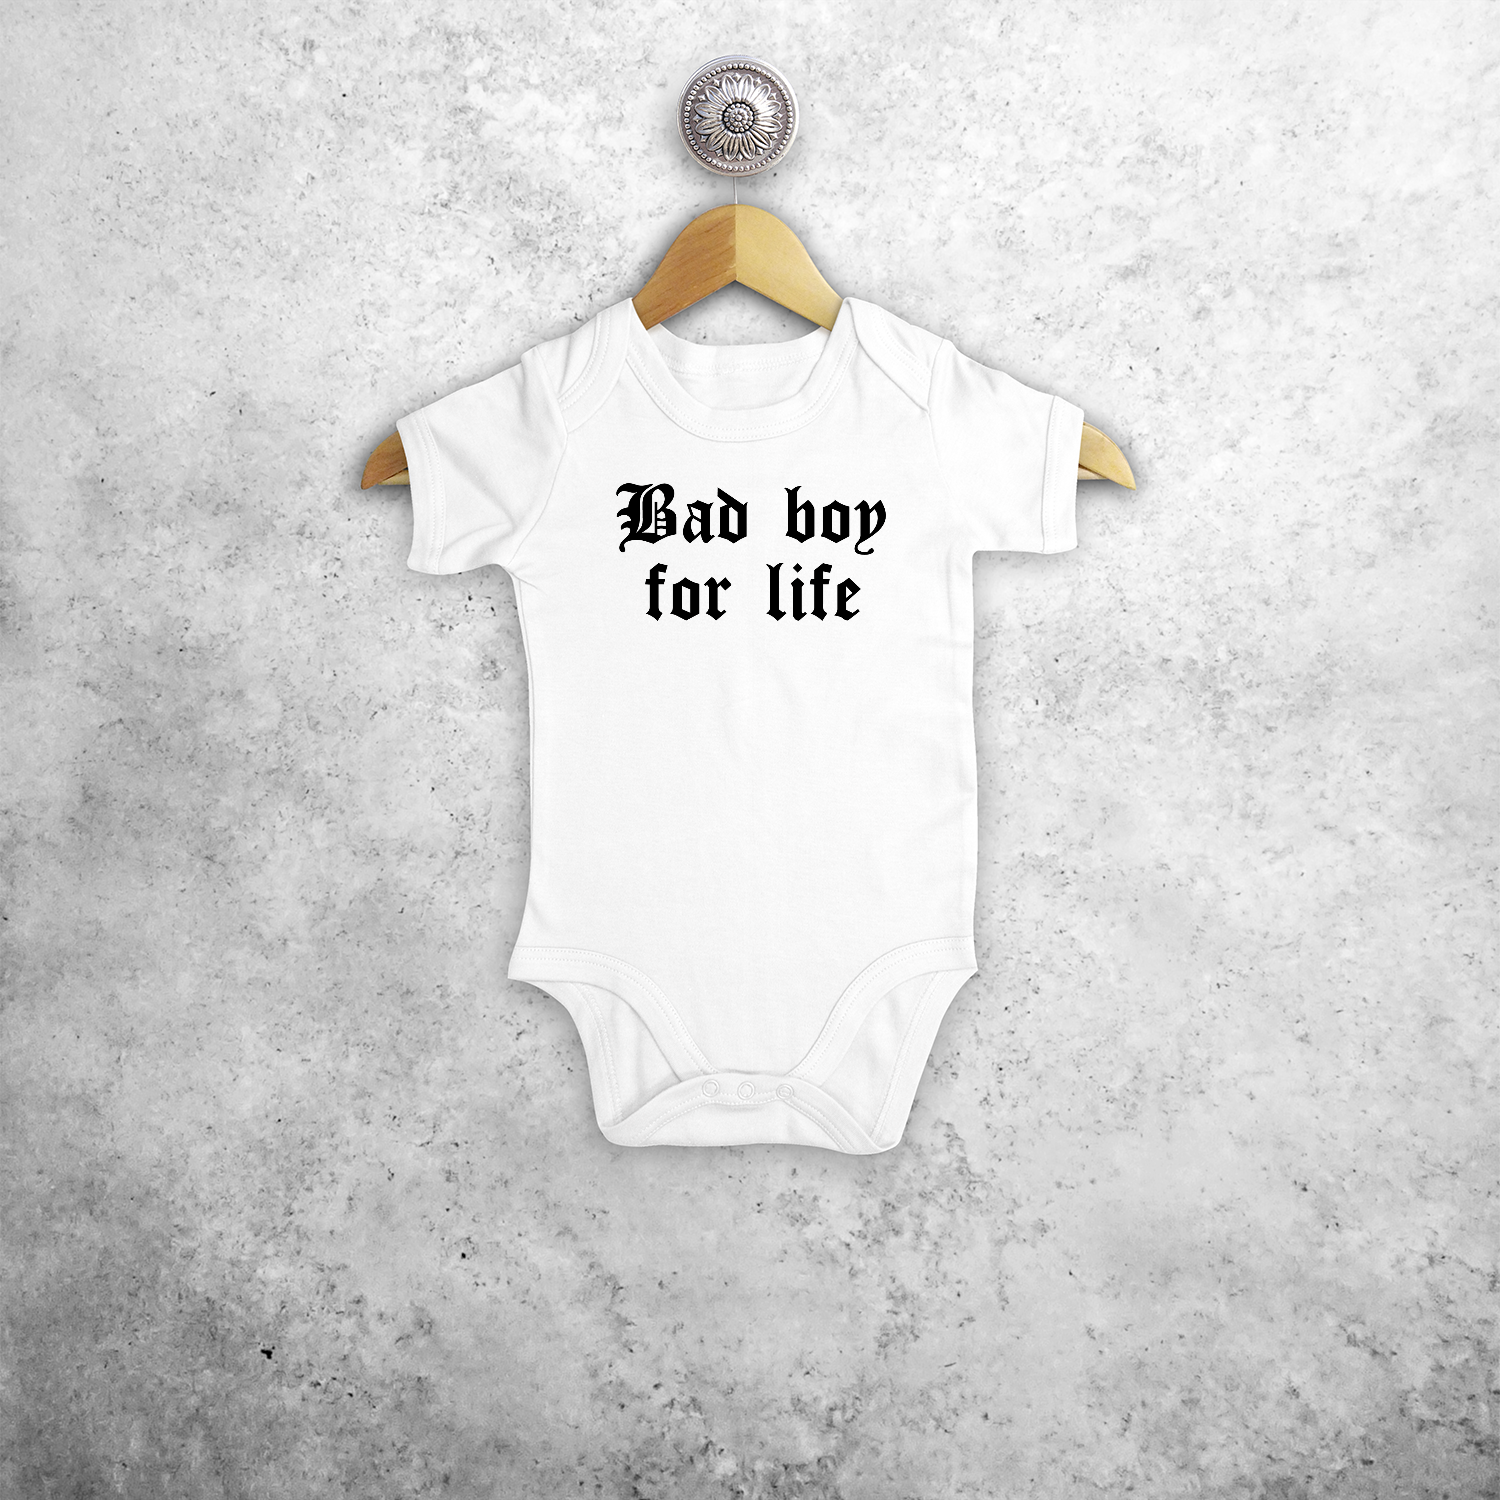 'Bad boy for life' baby shortsleeve bodysuit